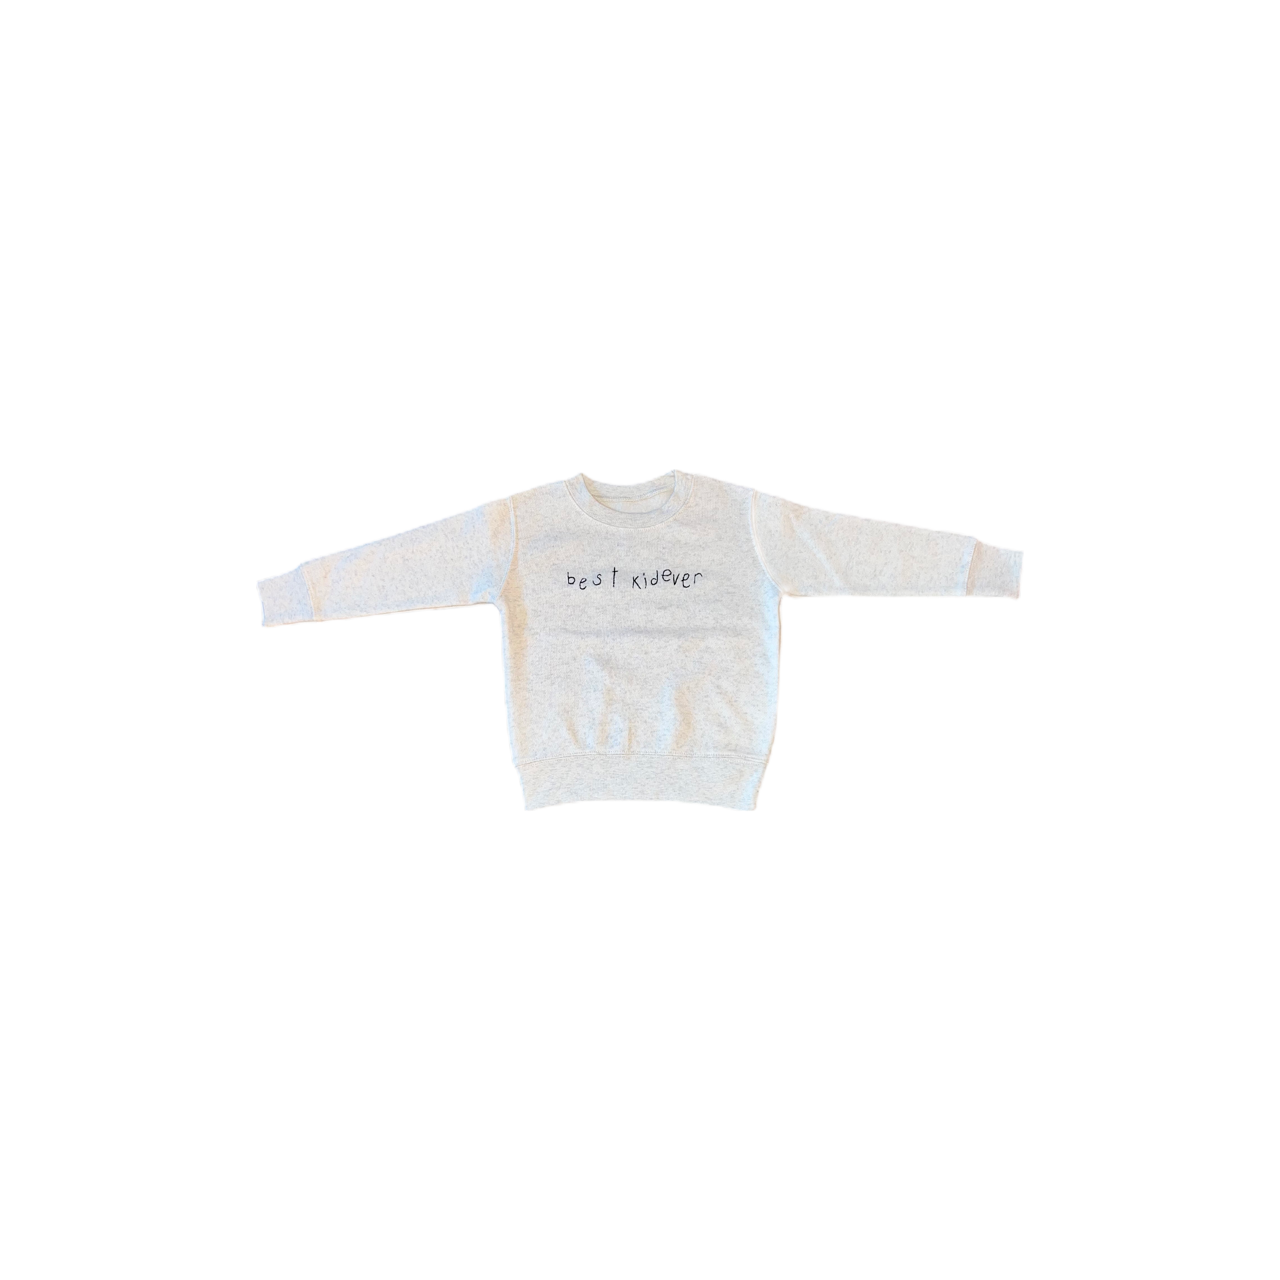 Best Kid Ever Embroidery Stitch Sweatshirt - Cream - Twinkle Twinkle Little One